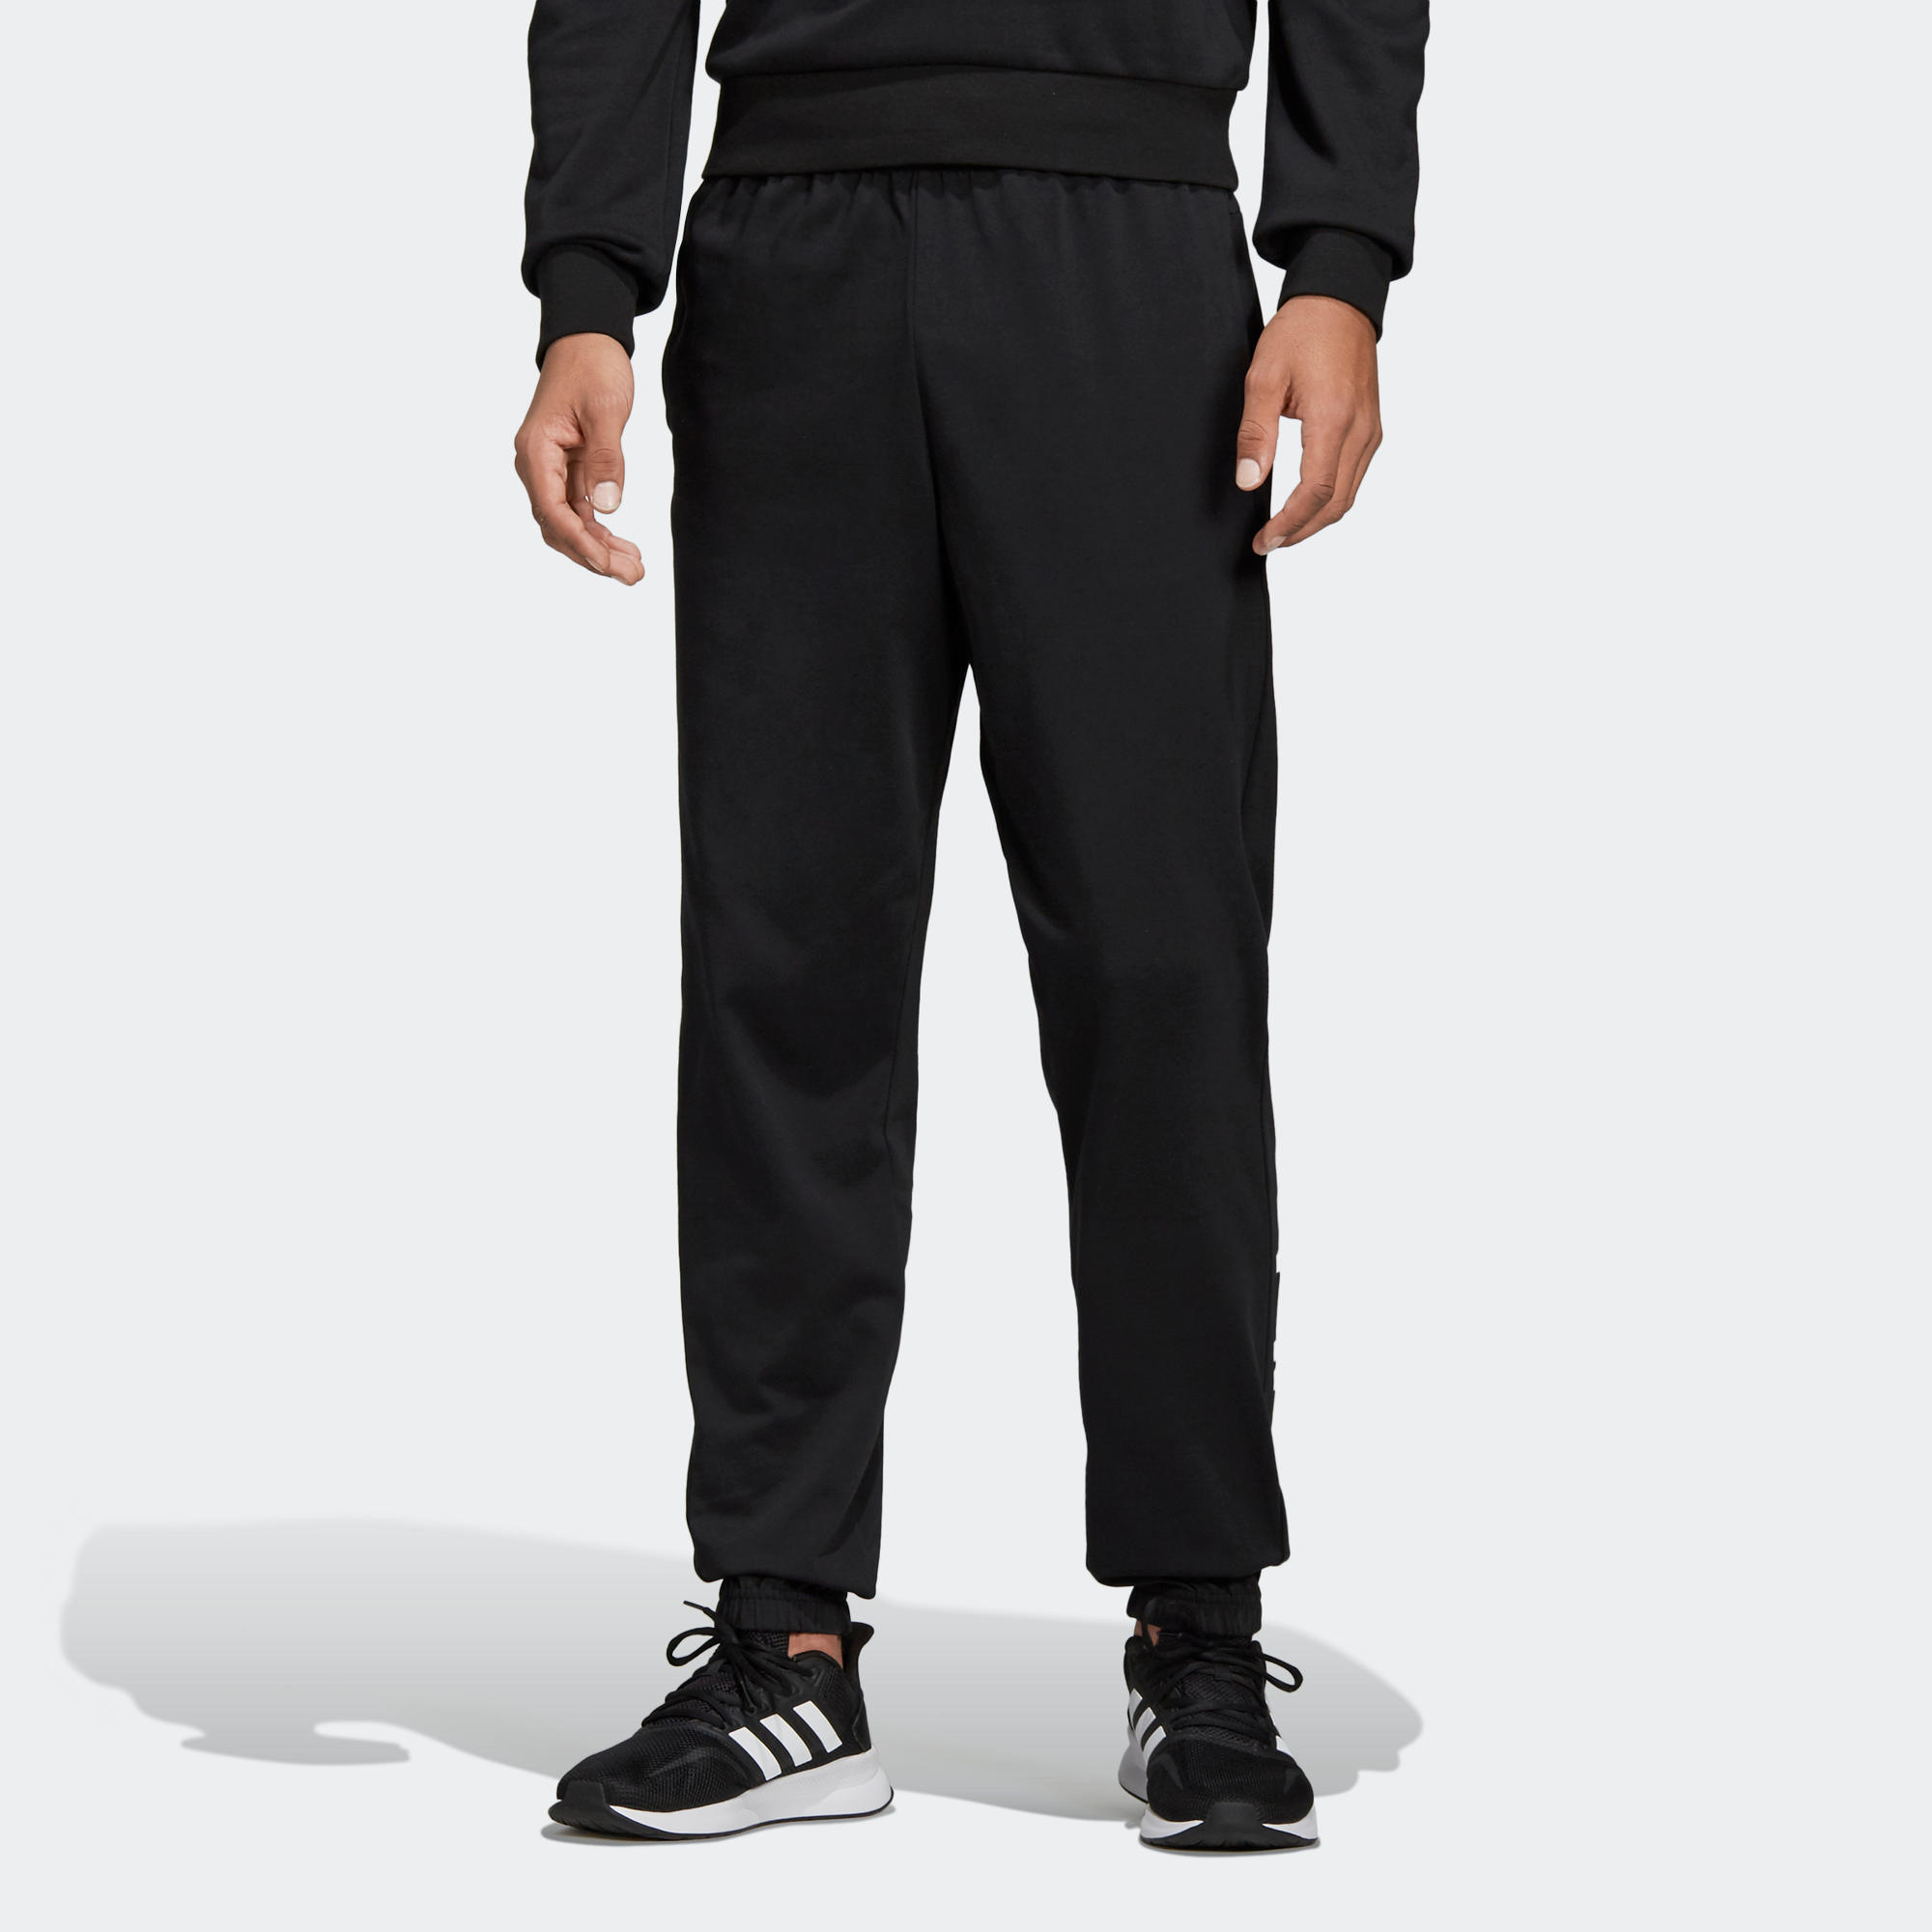 Adidas Pantalon de survêtement ADIDAS homme noir | Decathlon